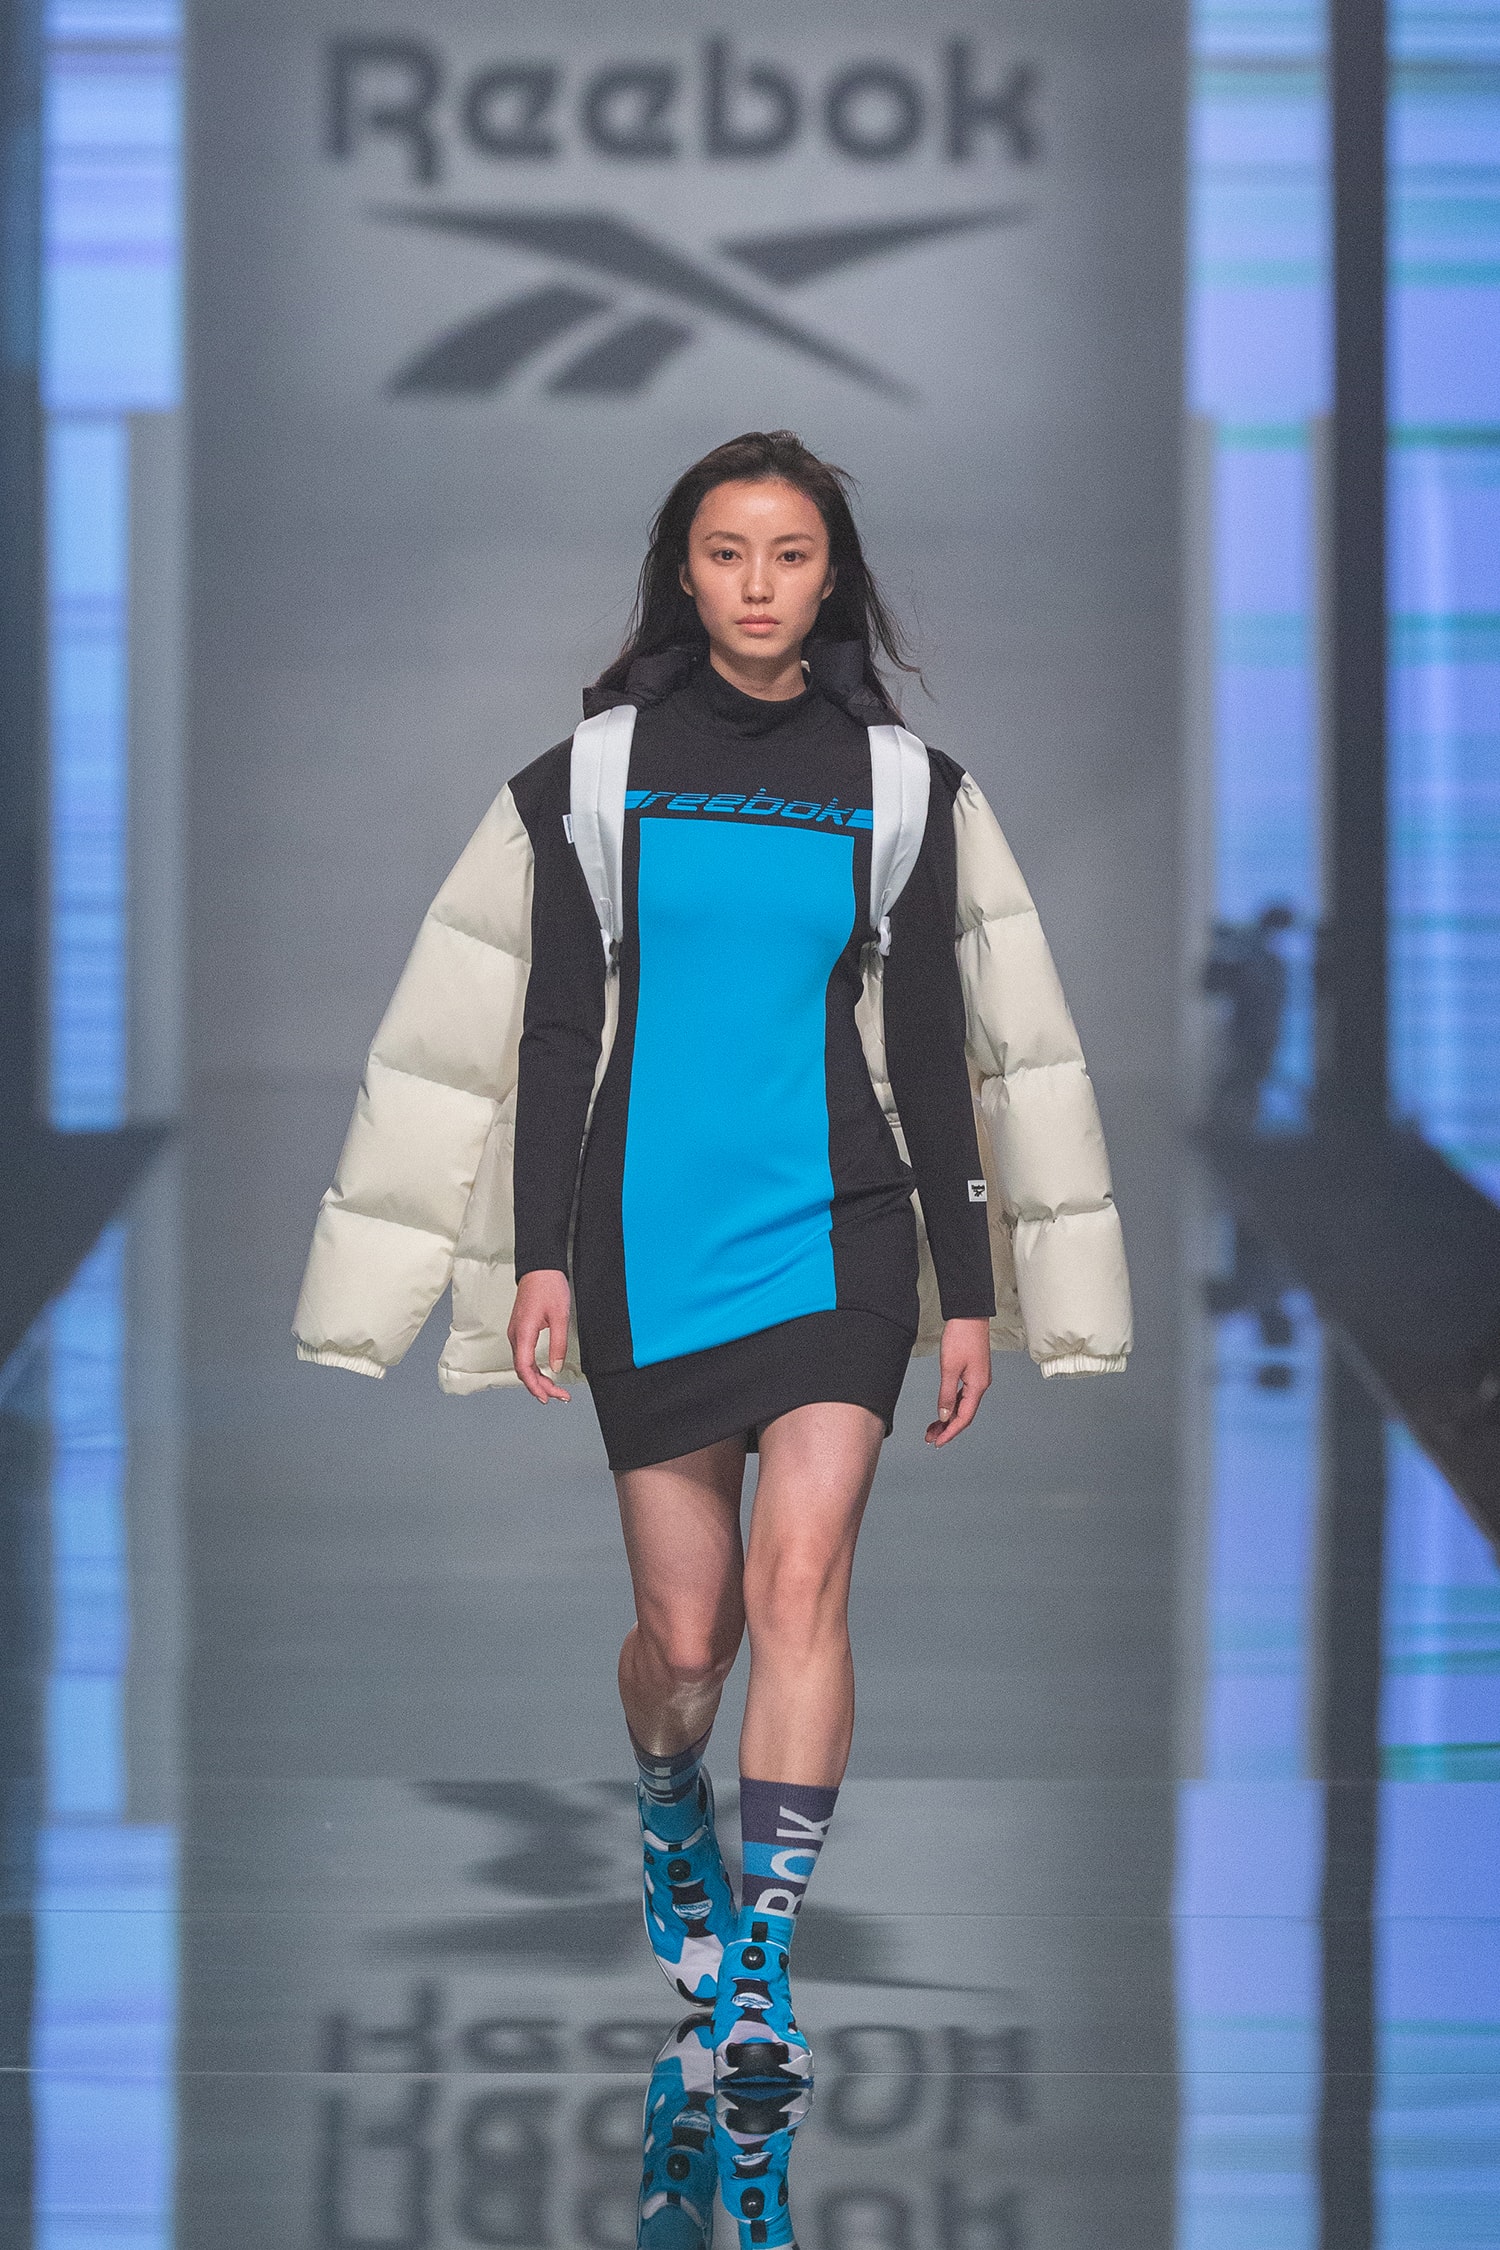 Twinkelen Portier vergiftigen Reebok Opens Shanghai Fashion Week With Show | Hypebae